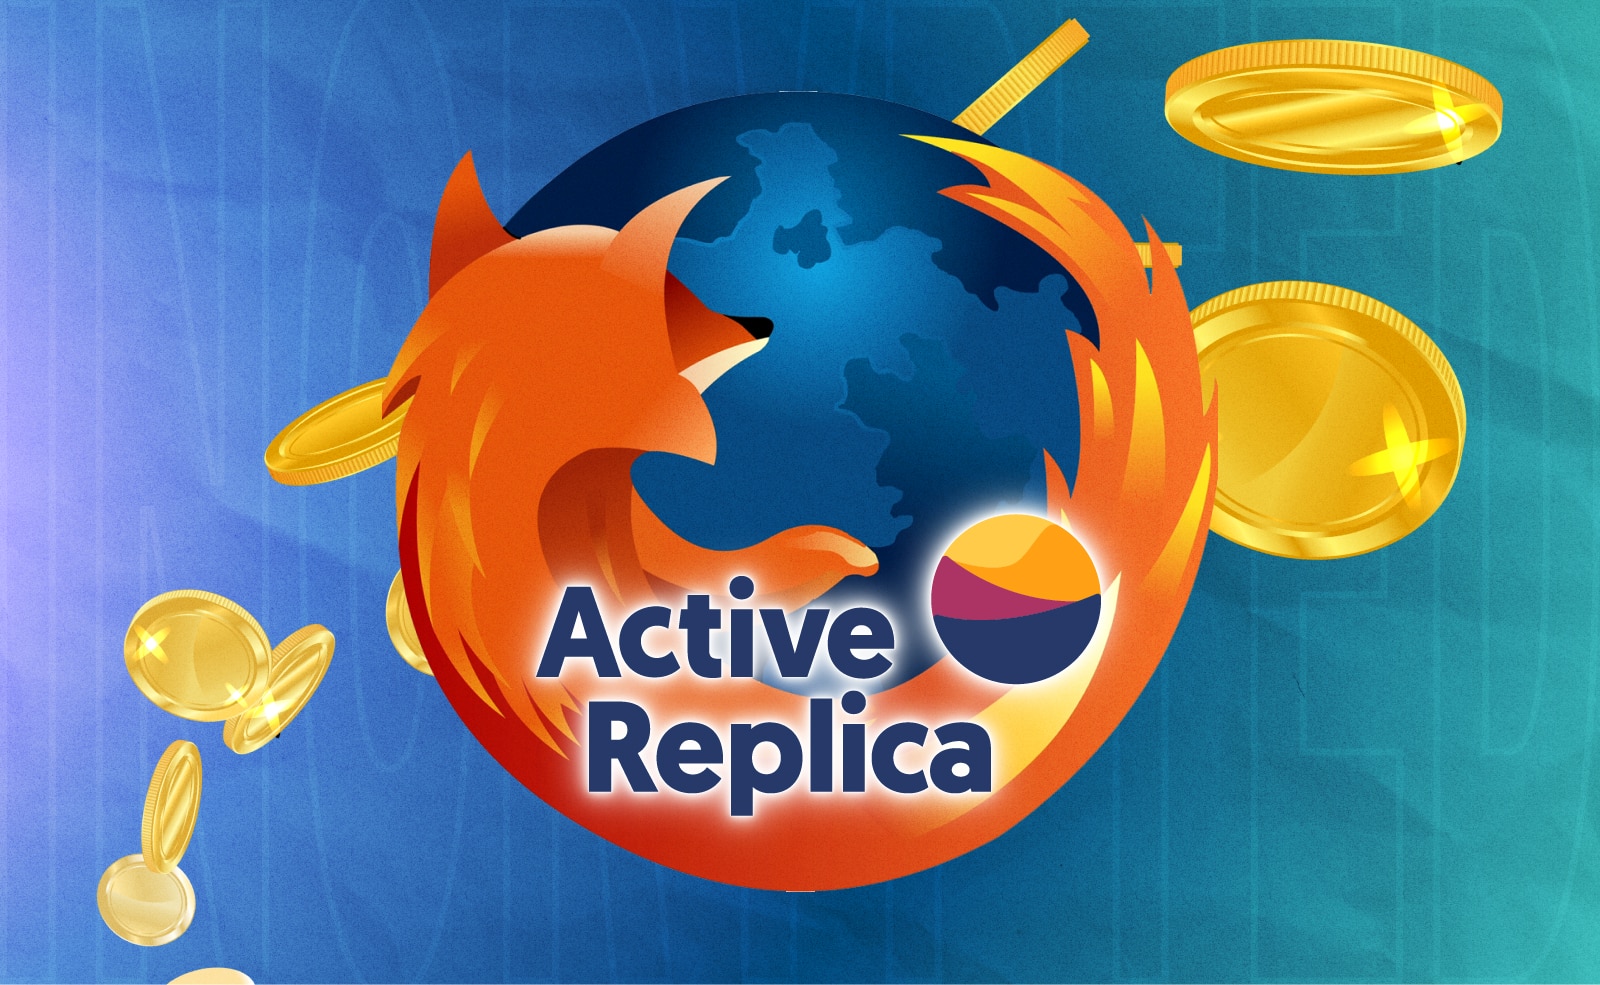 Інтернет-браузер Mozilla придбав Active Replica у рамках своєї екосистеми Hubs creator. Головний колаж новини.